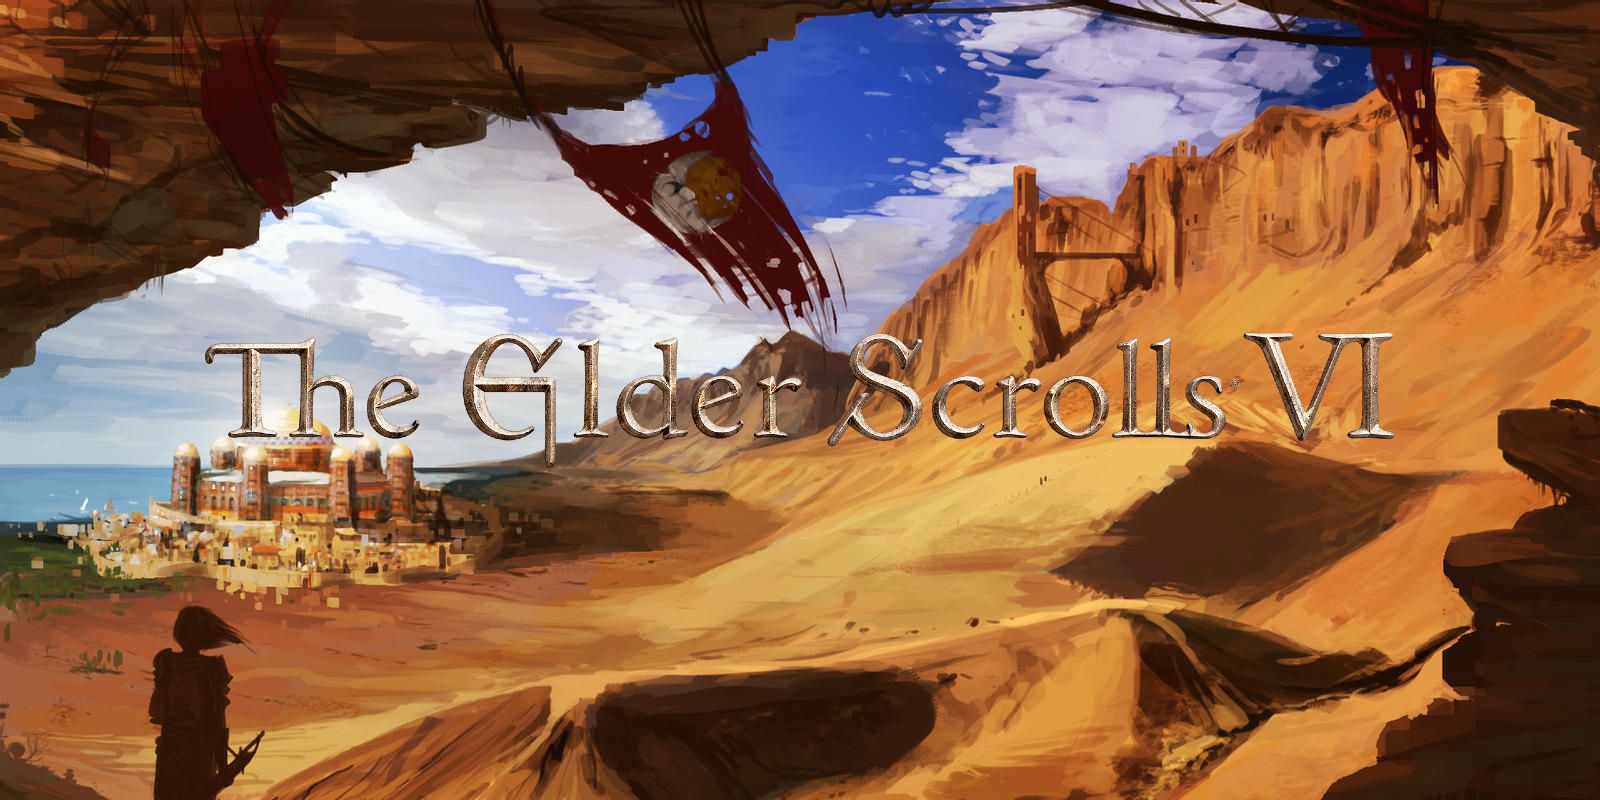 The Elder Scrolls VI: Hammerfell - Cinematic Trailer 